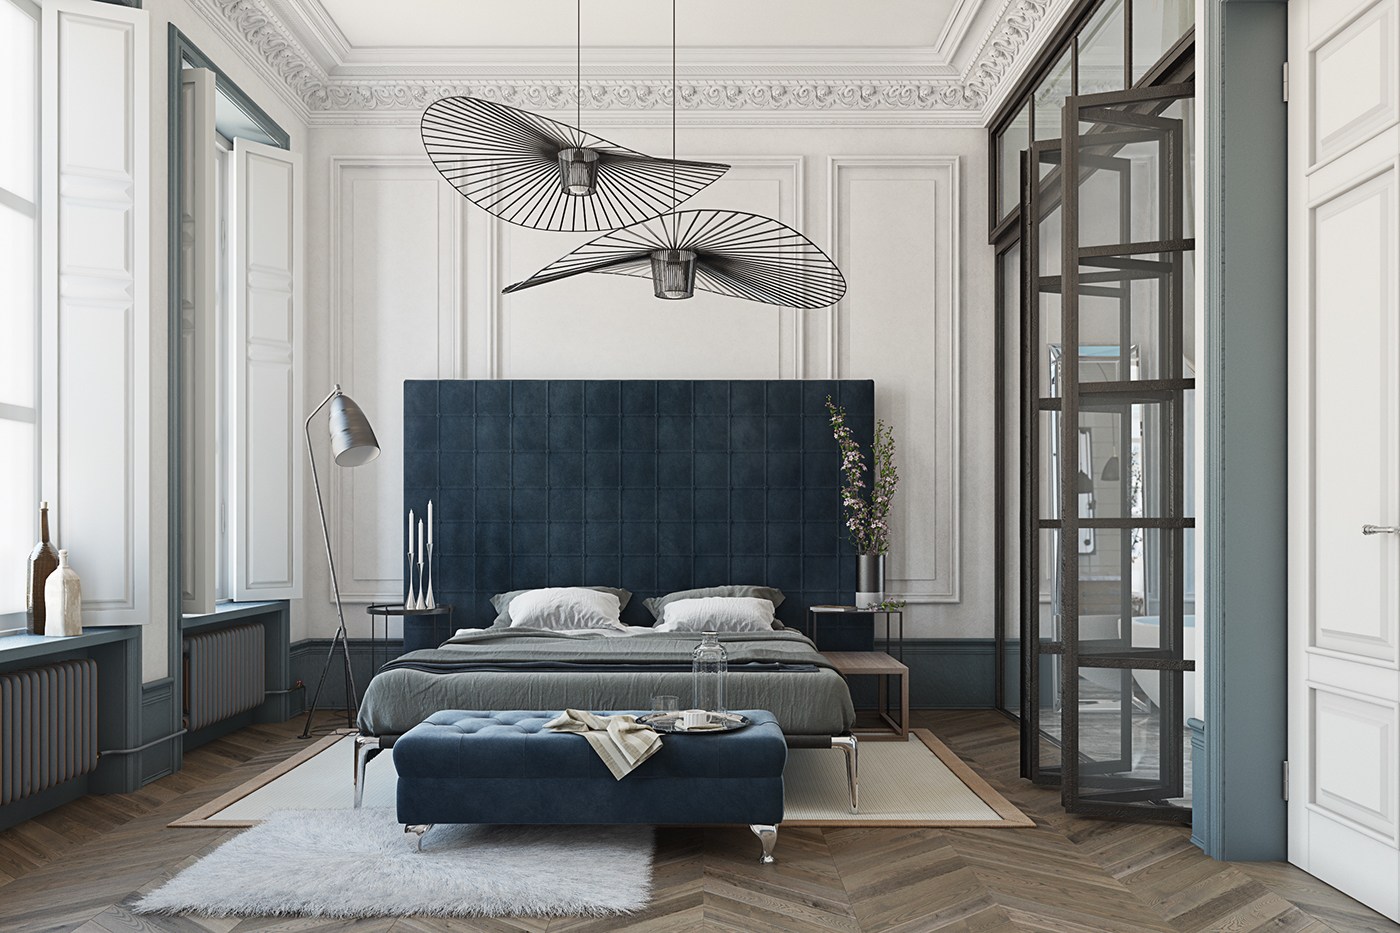 3 Kind Of Elegant Bedroom Design Ideas Includes a Brilliant Decor That